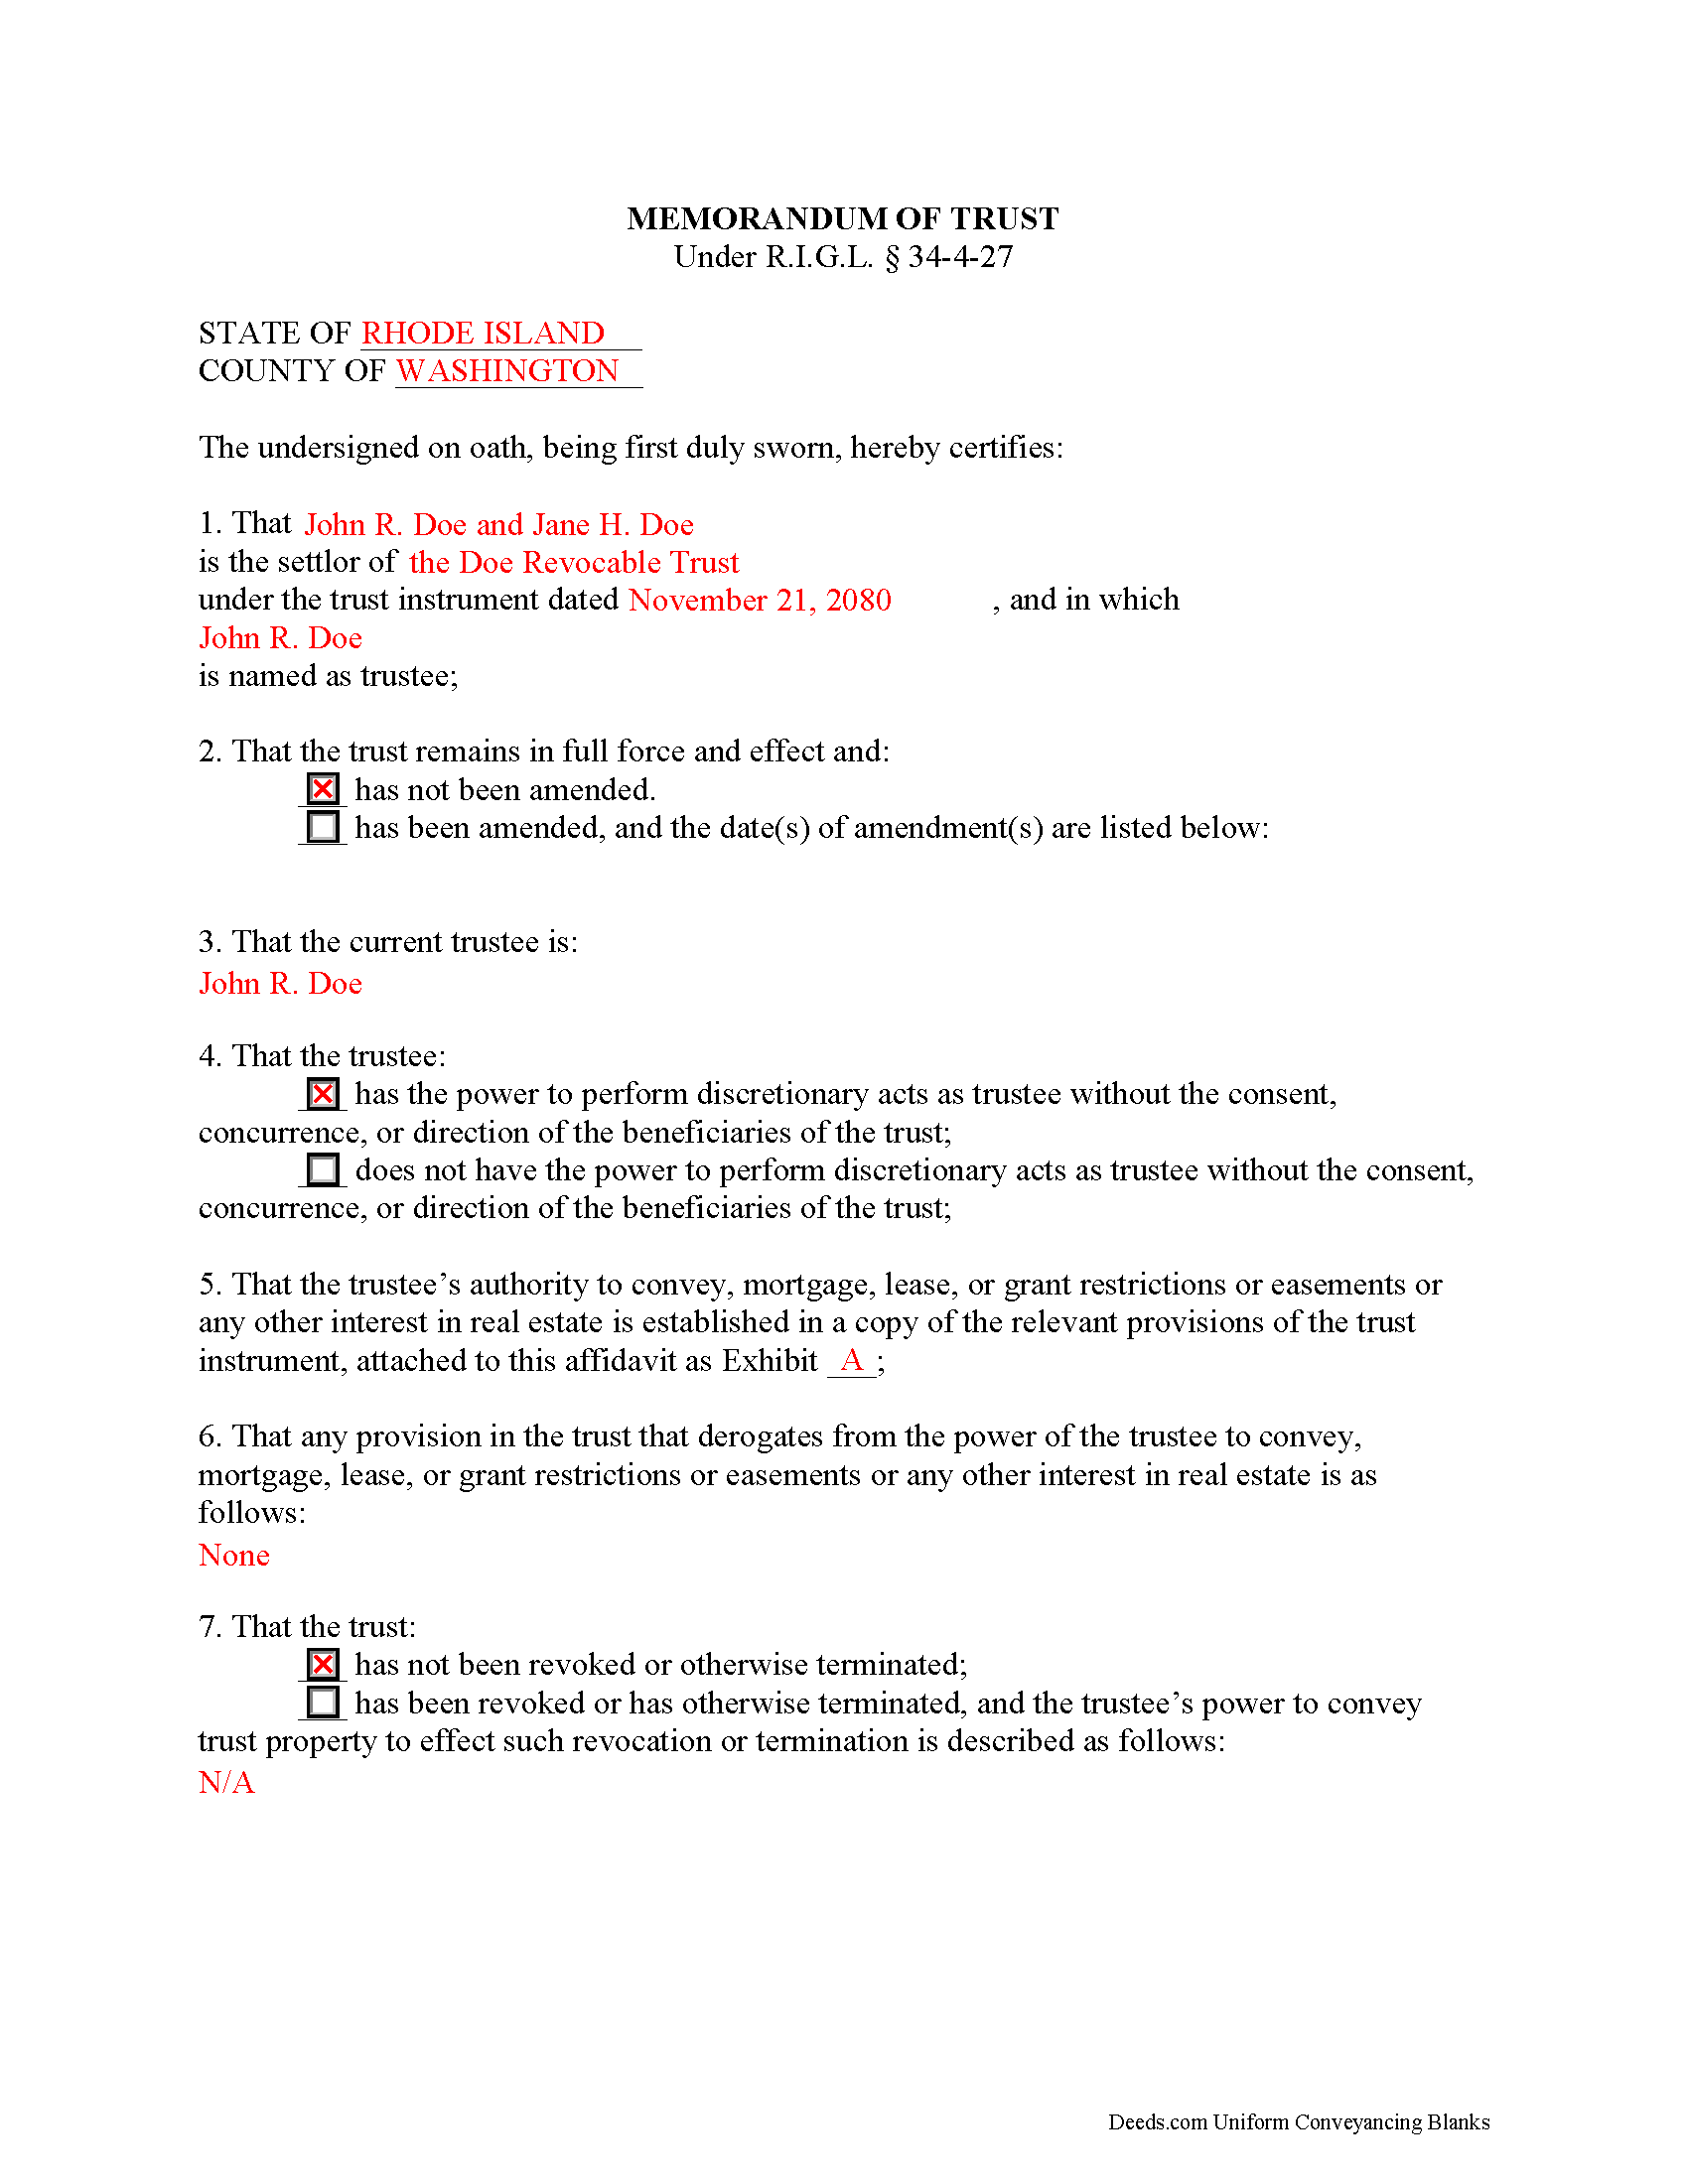 Completed Example of the Memorandum of Trust Document